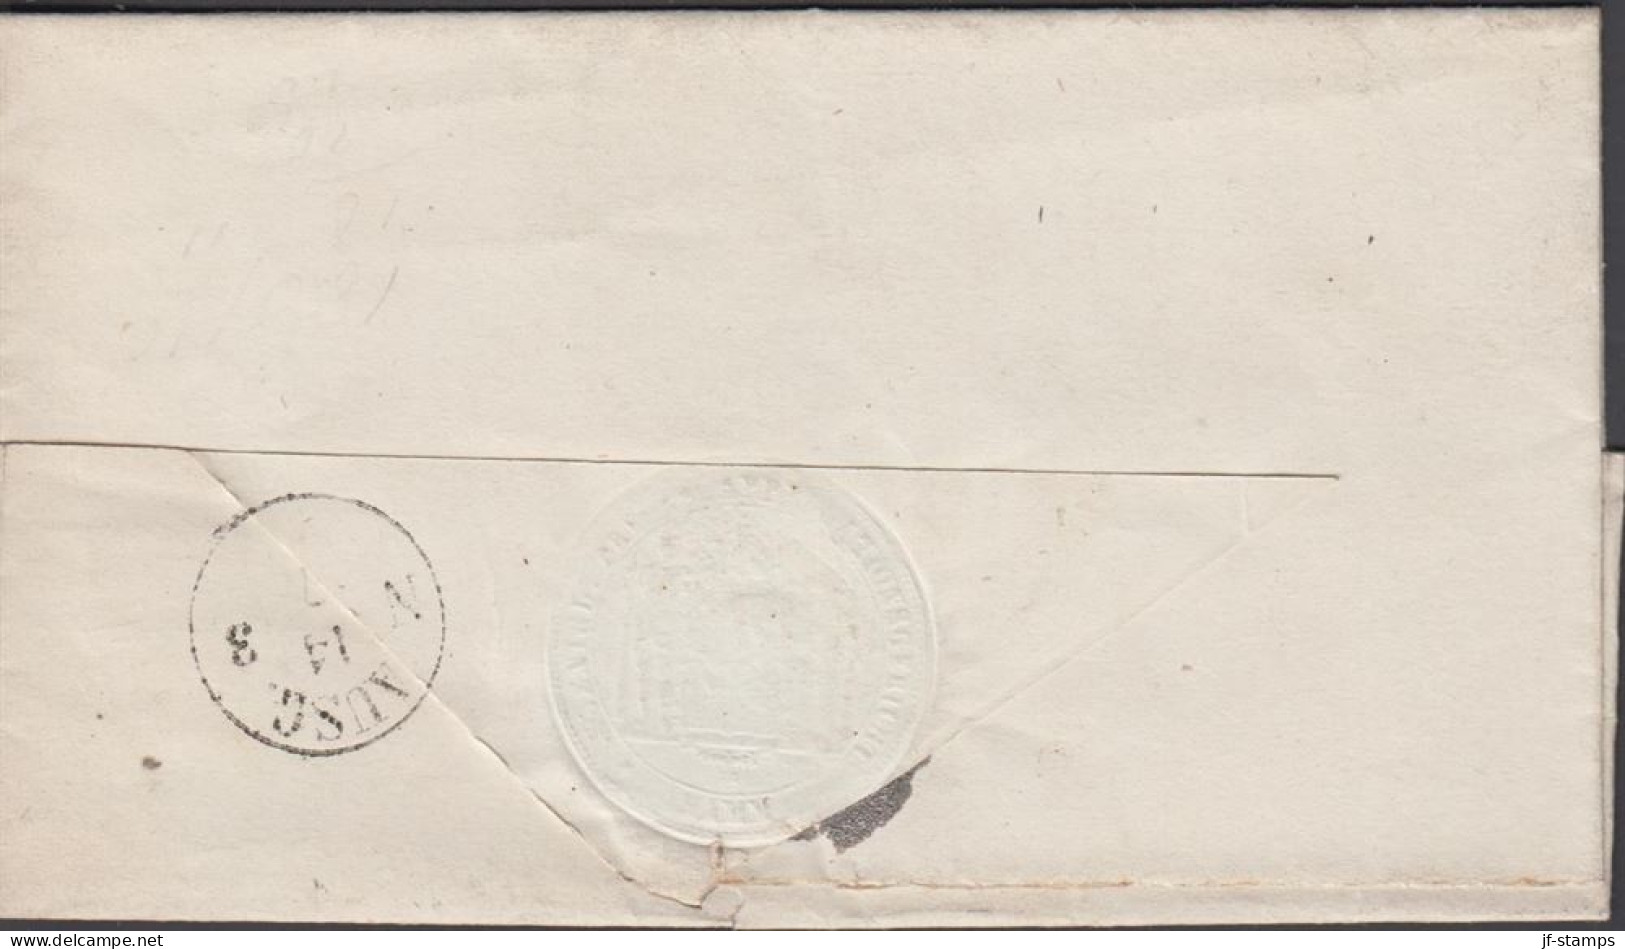 1855. DEUTSCHLAND. Fine Cover Cancelled HAMM 11/7 + The Unusual OVAL CANCEL Binge. Reverse Seal From GERIC... - JF436626 - Préphilatélie